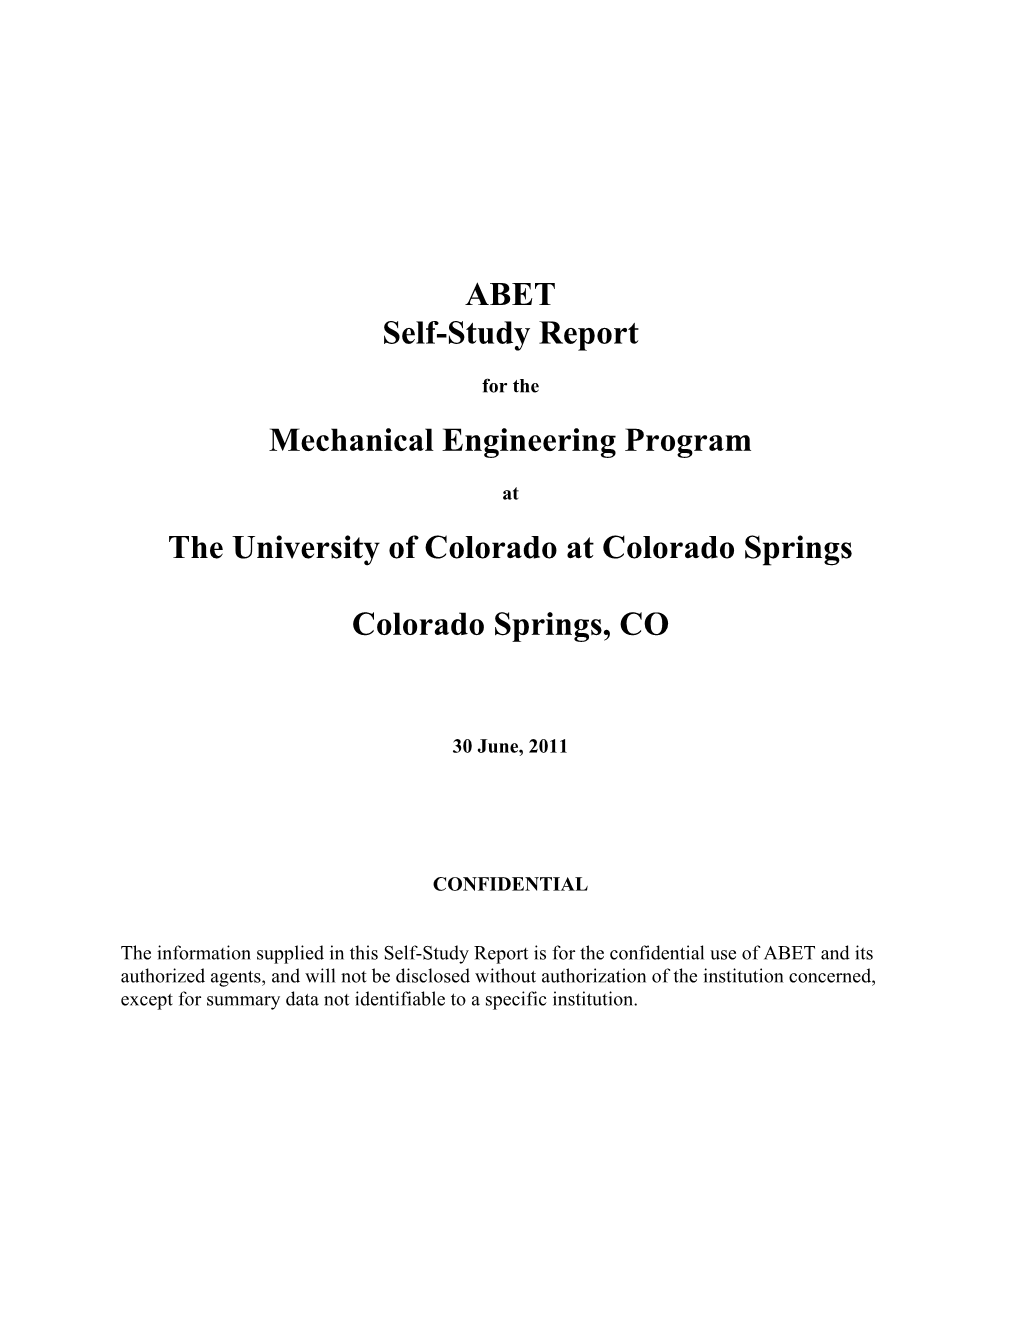 ABET Self-Study Report Mechanical Engineering Program The